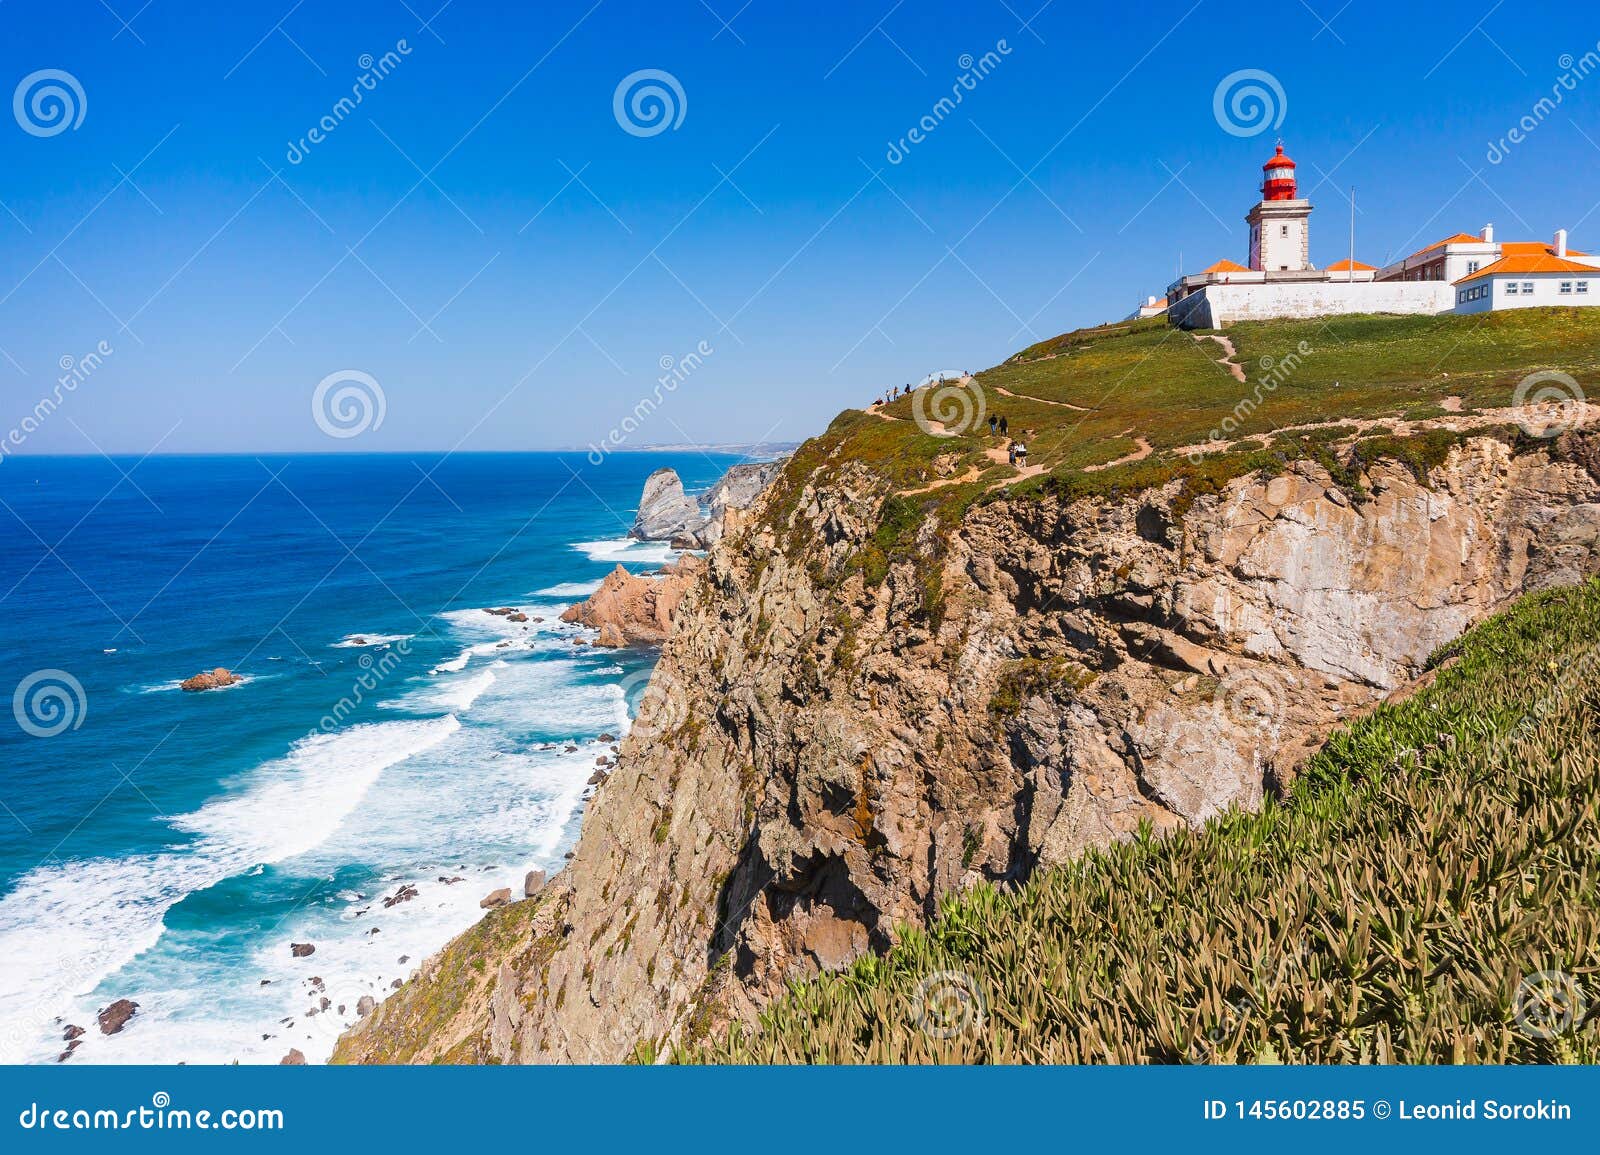 cabo da roca, portugal. lighthouse and cliffs over atlantic ocean